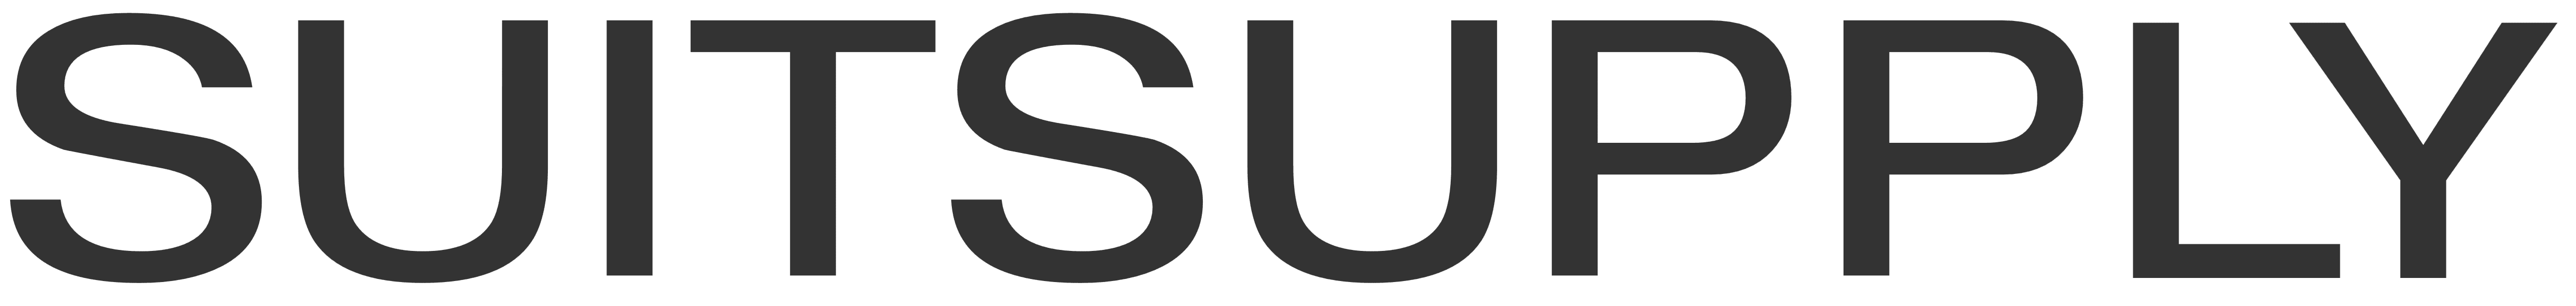 Suitsupply_logo